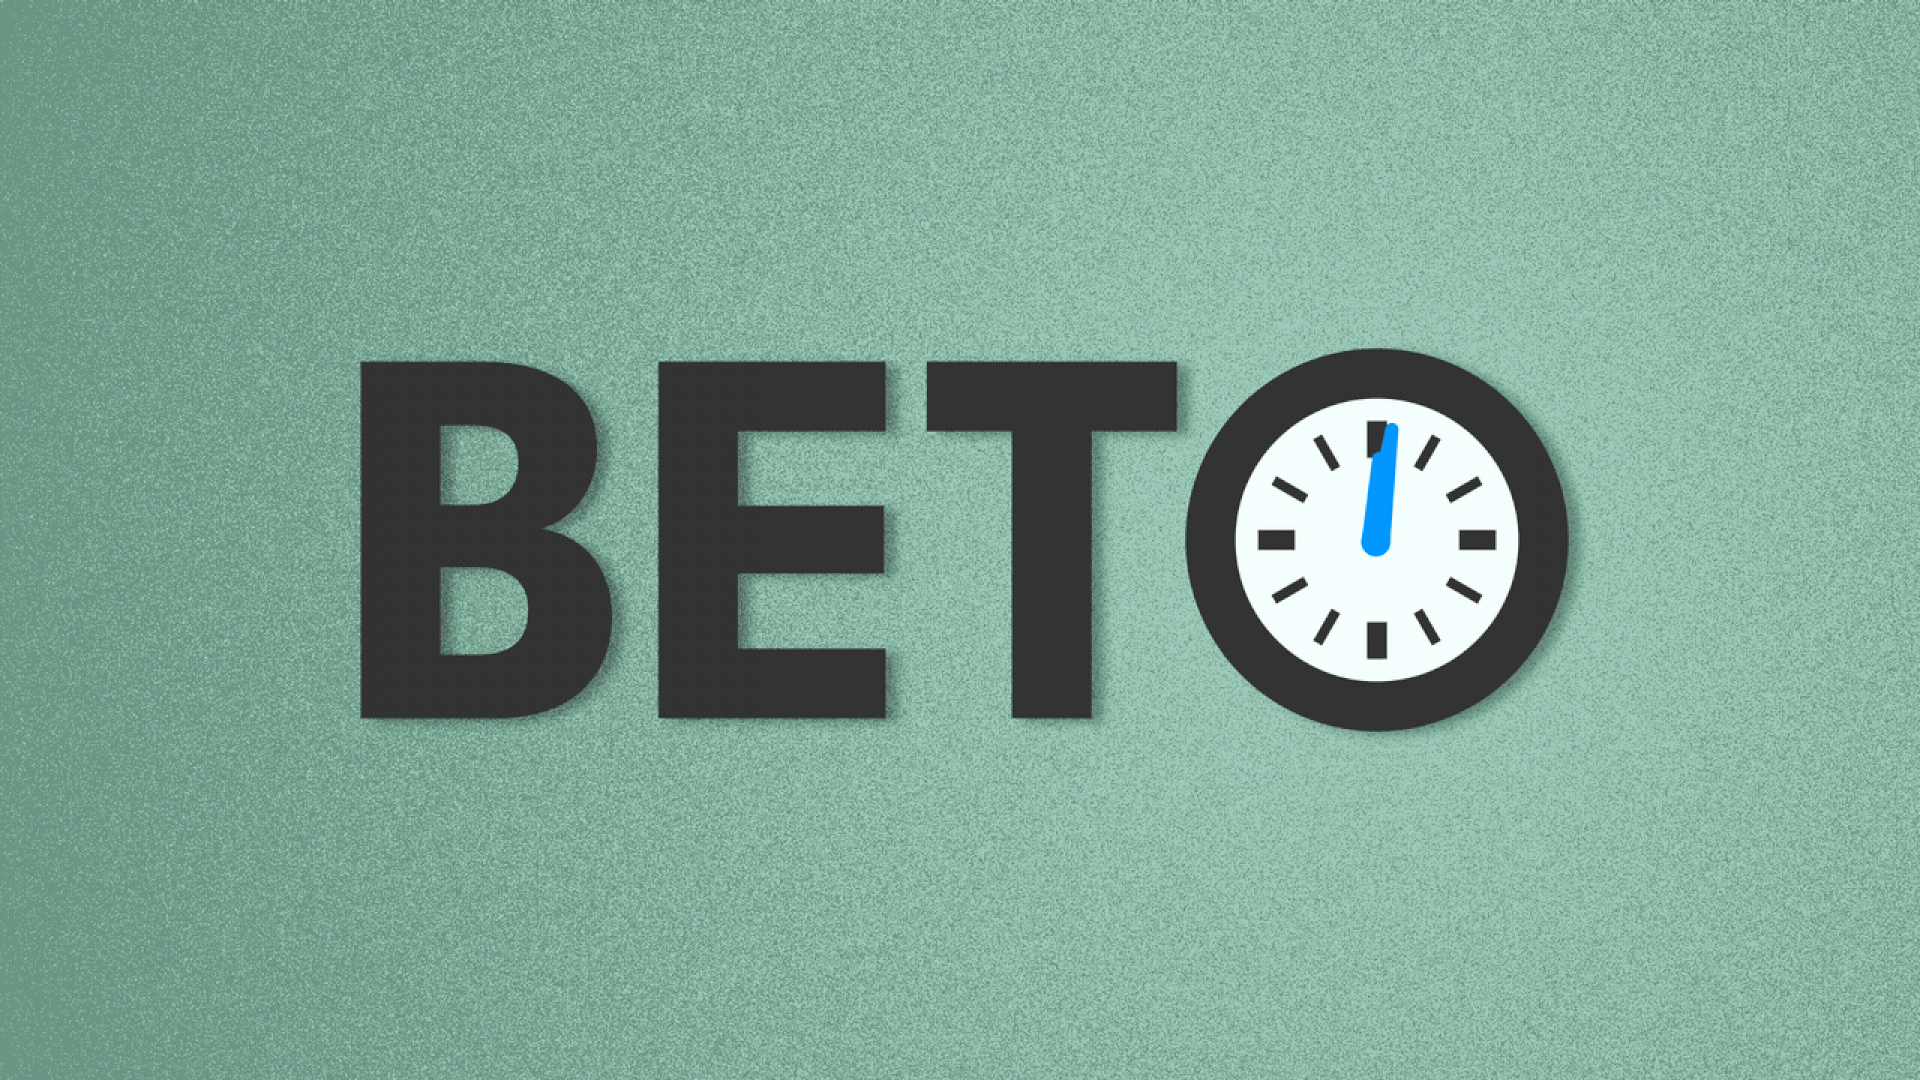 Axios' Beto countdown clock